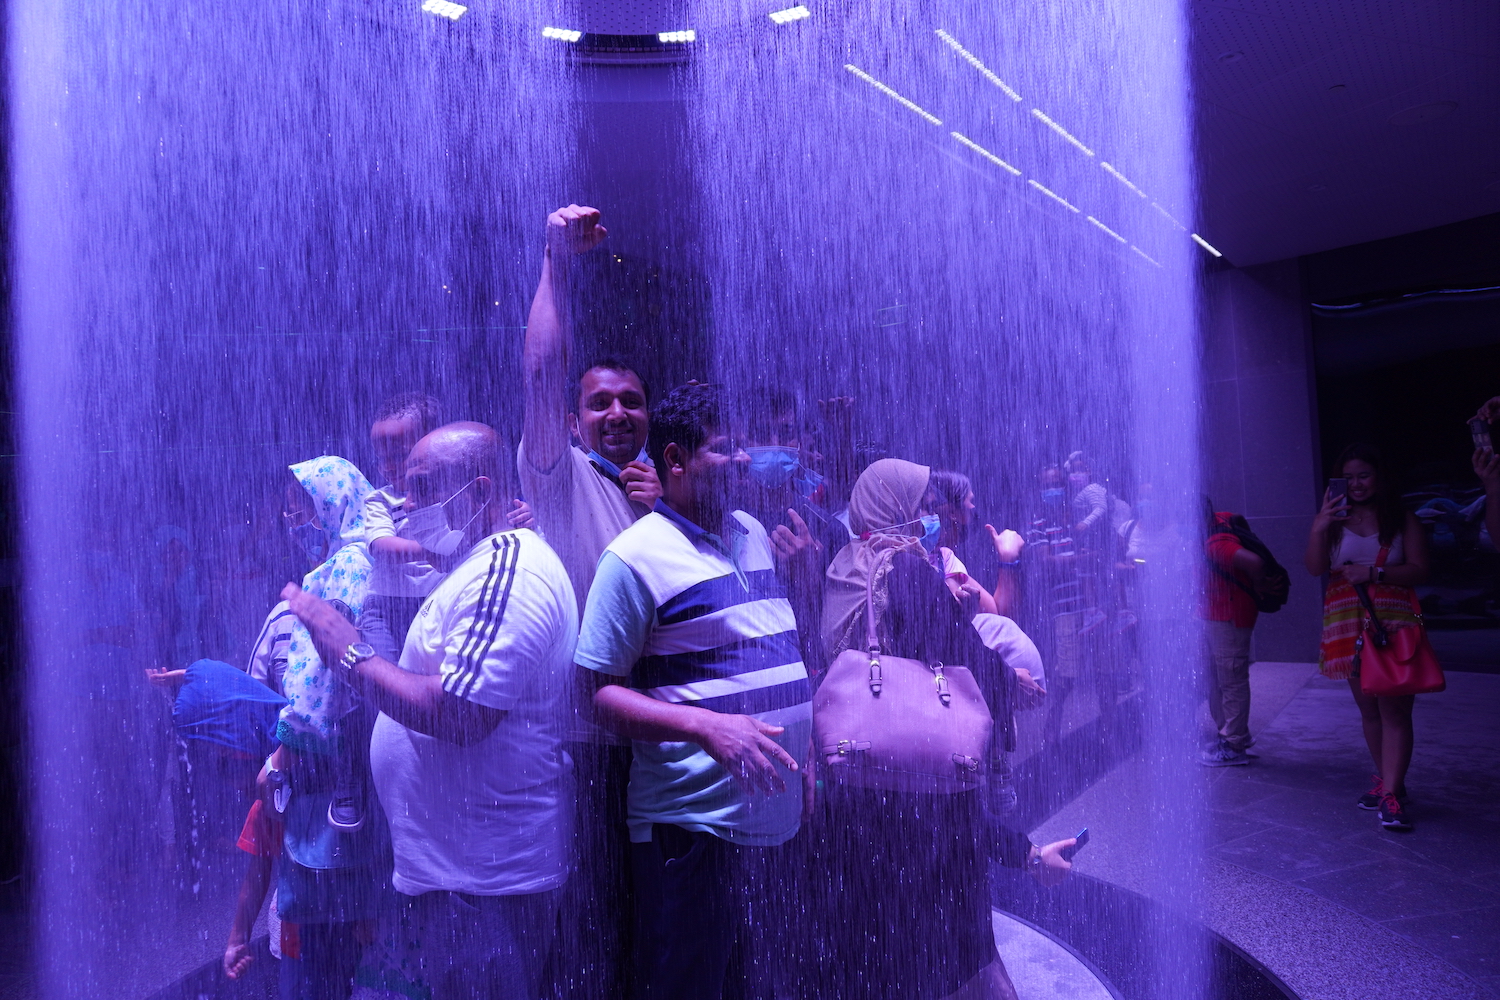 Guests enjoy the rain fountain at the Saudi Arabia pavilion at Expo 2020 Dubai.